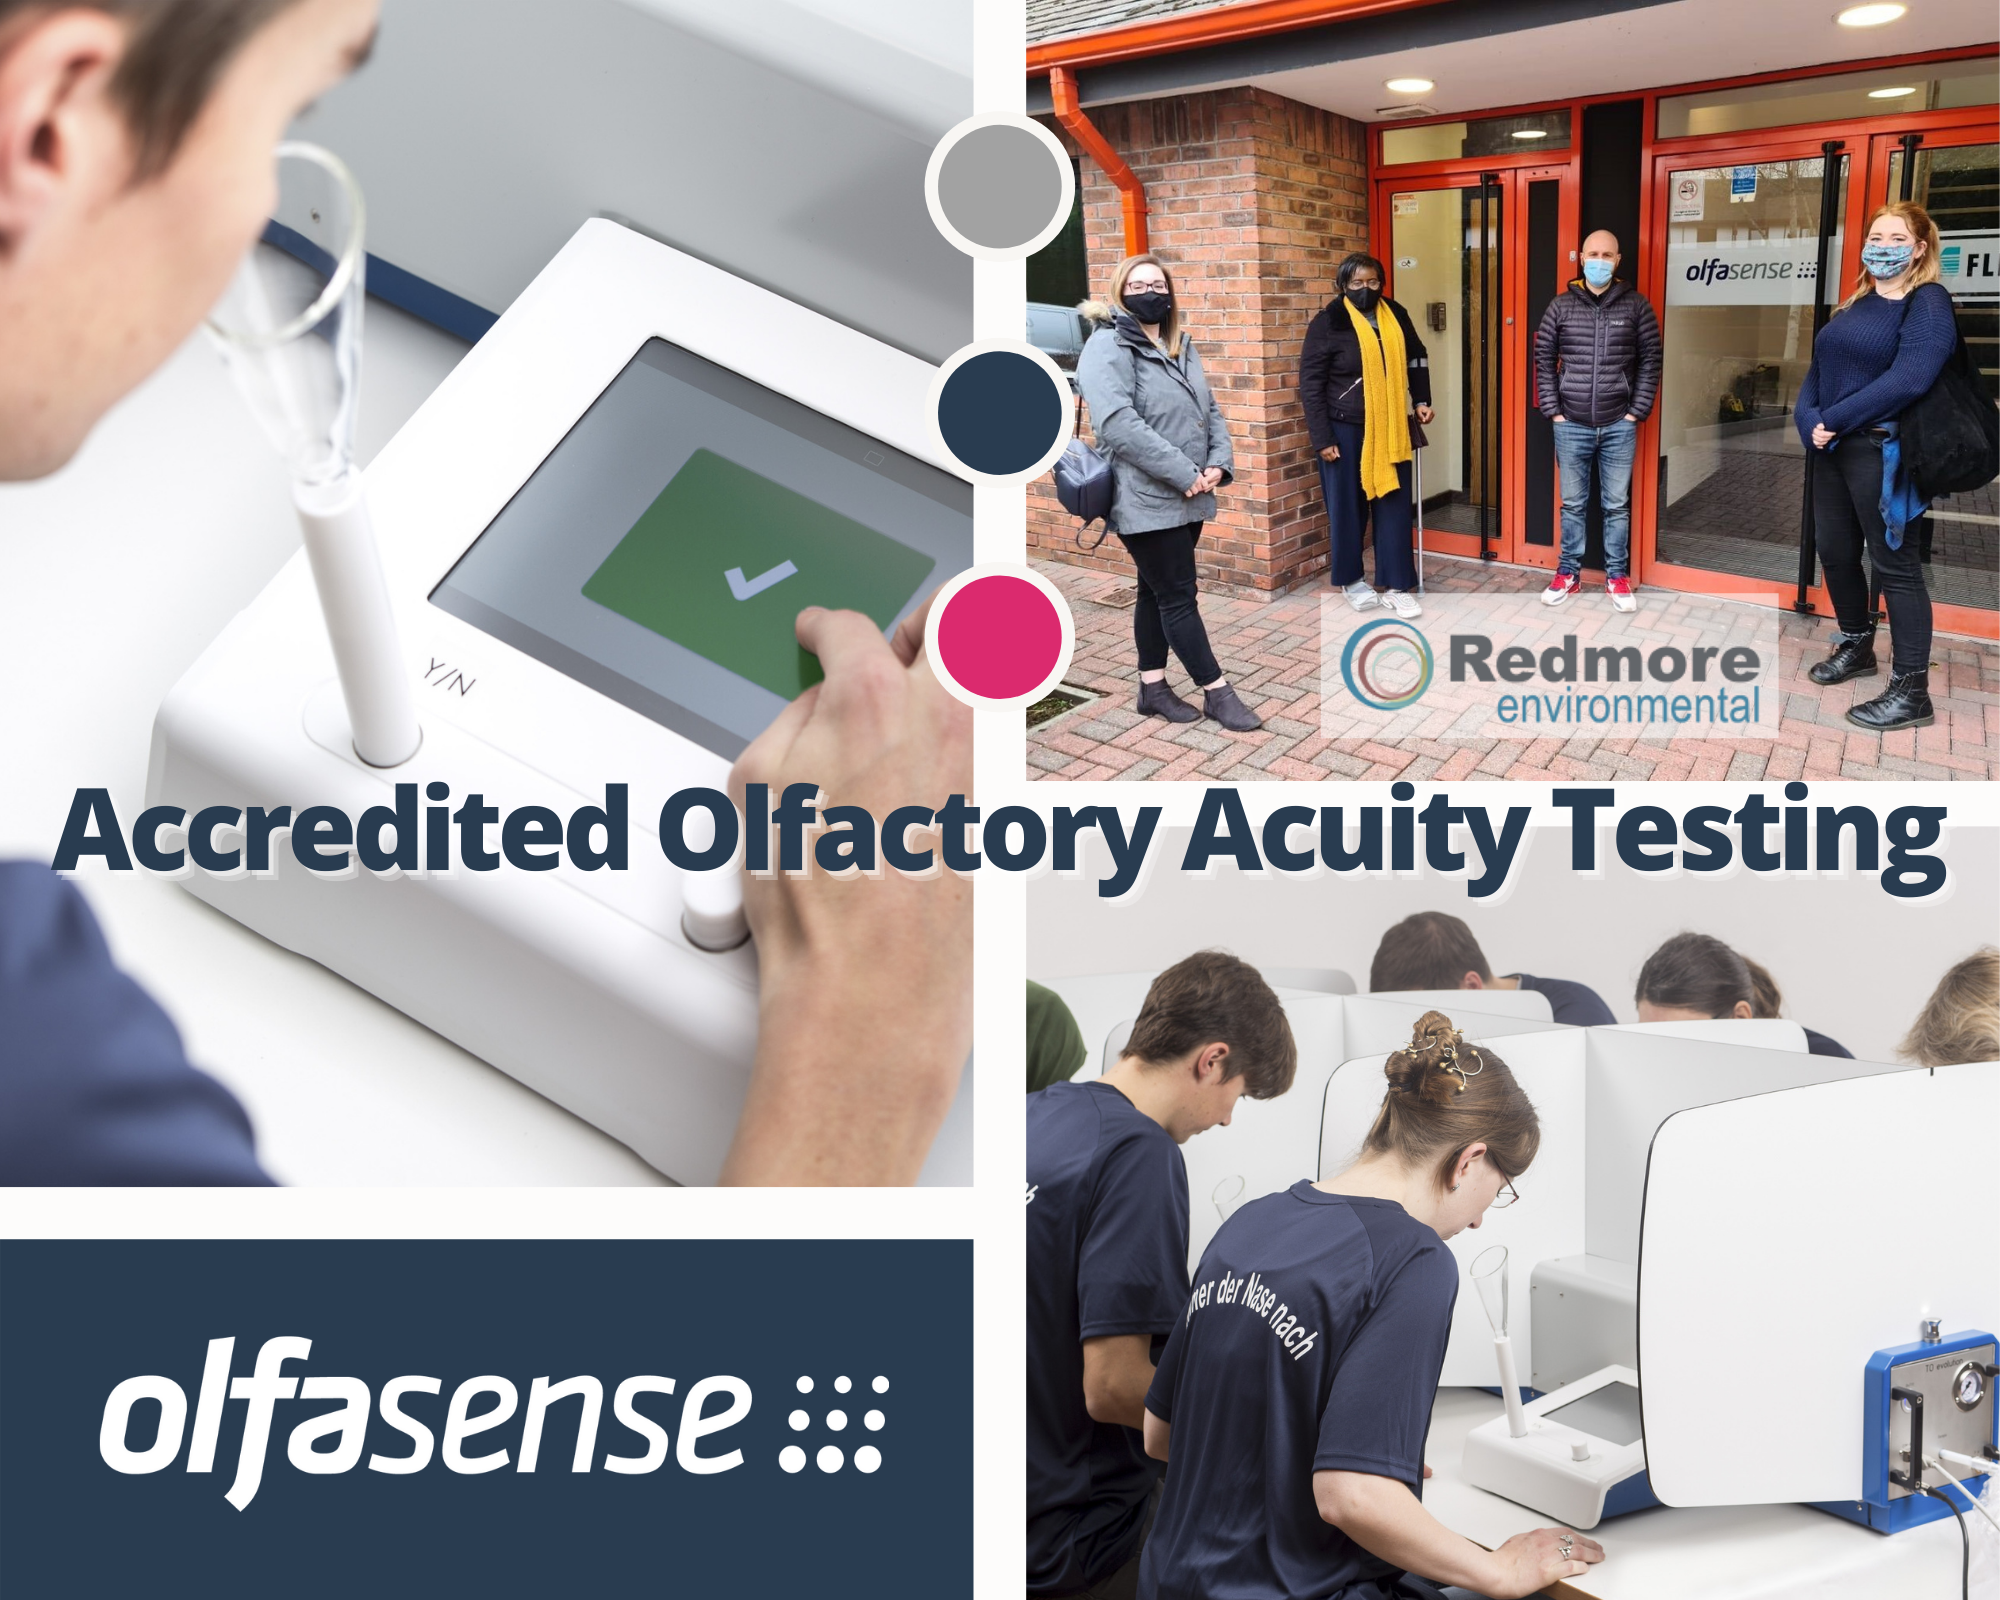 Olfactory acuity testing